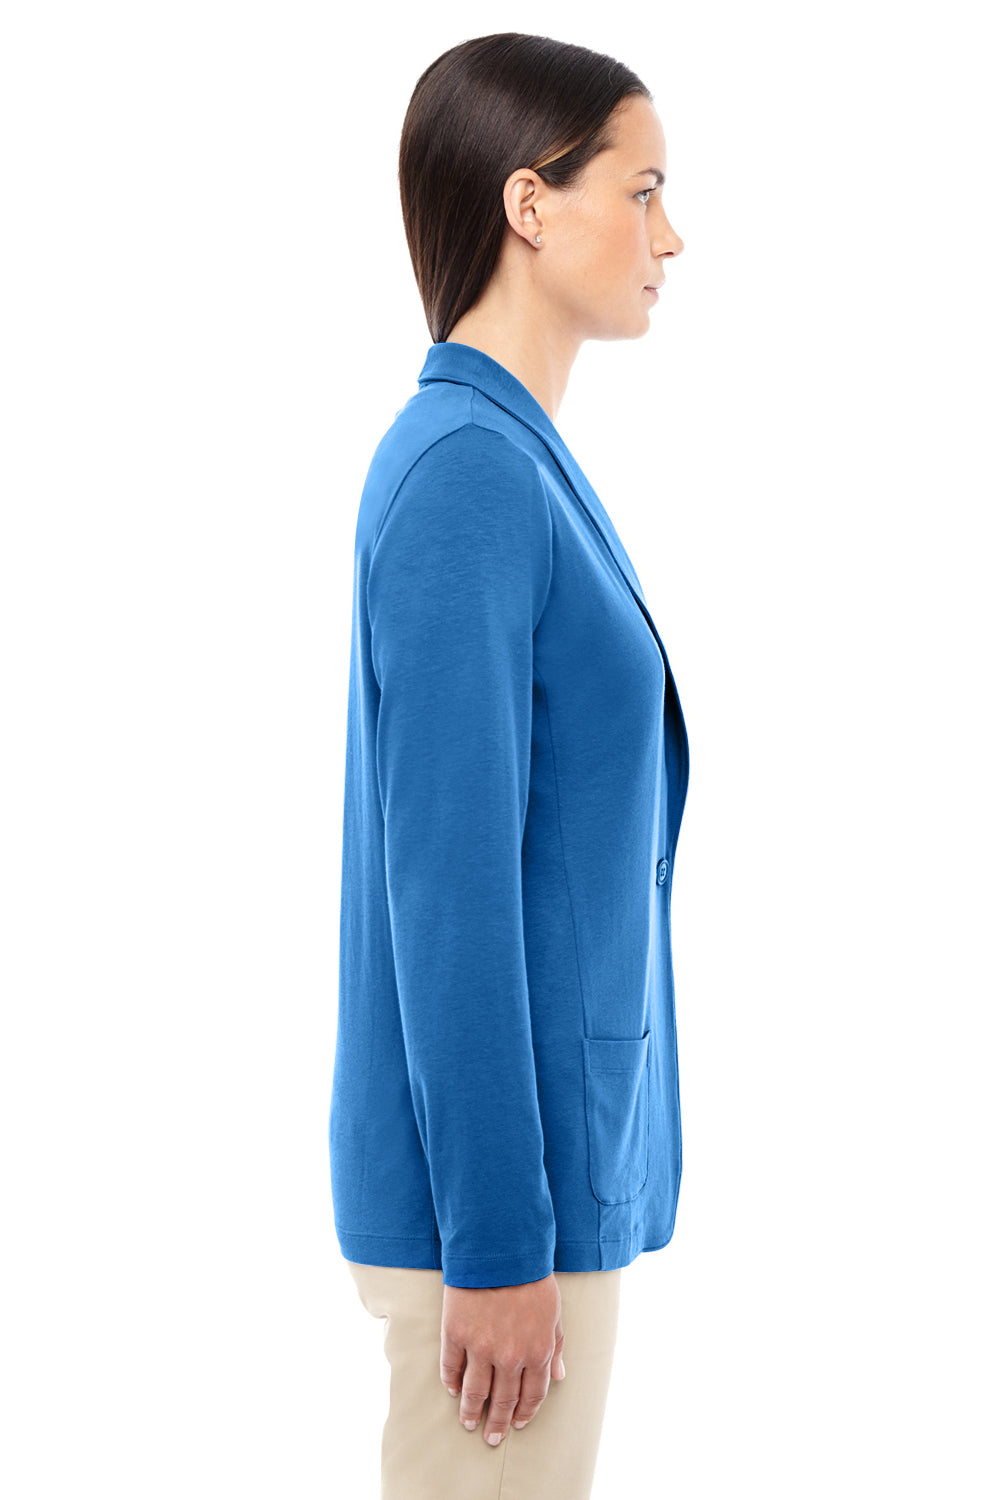 Devon & Jones DP462W Womens Perfect Fit Cardigan Sweater French Blue Side